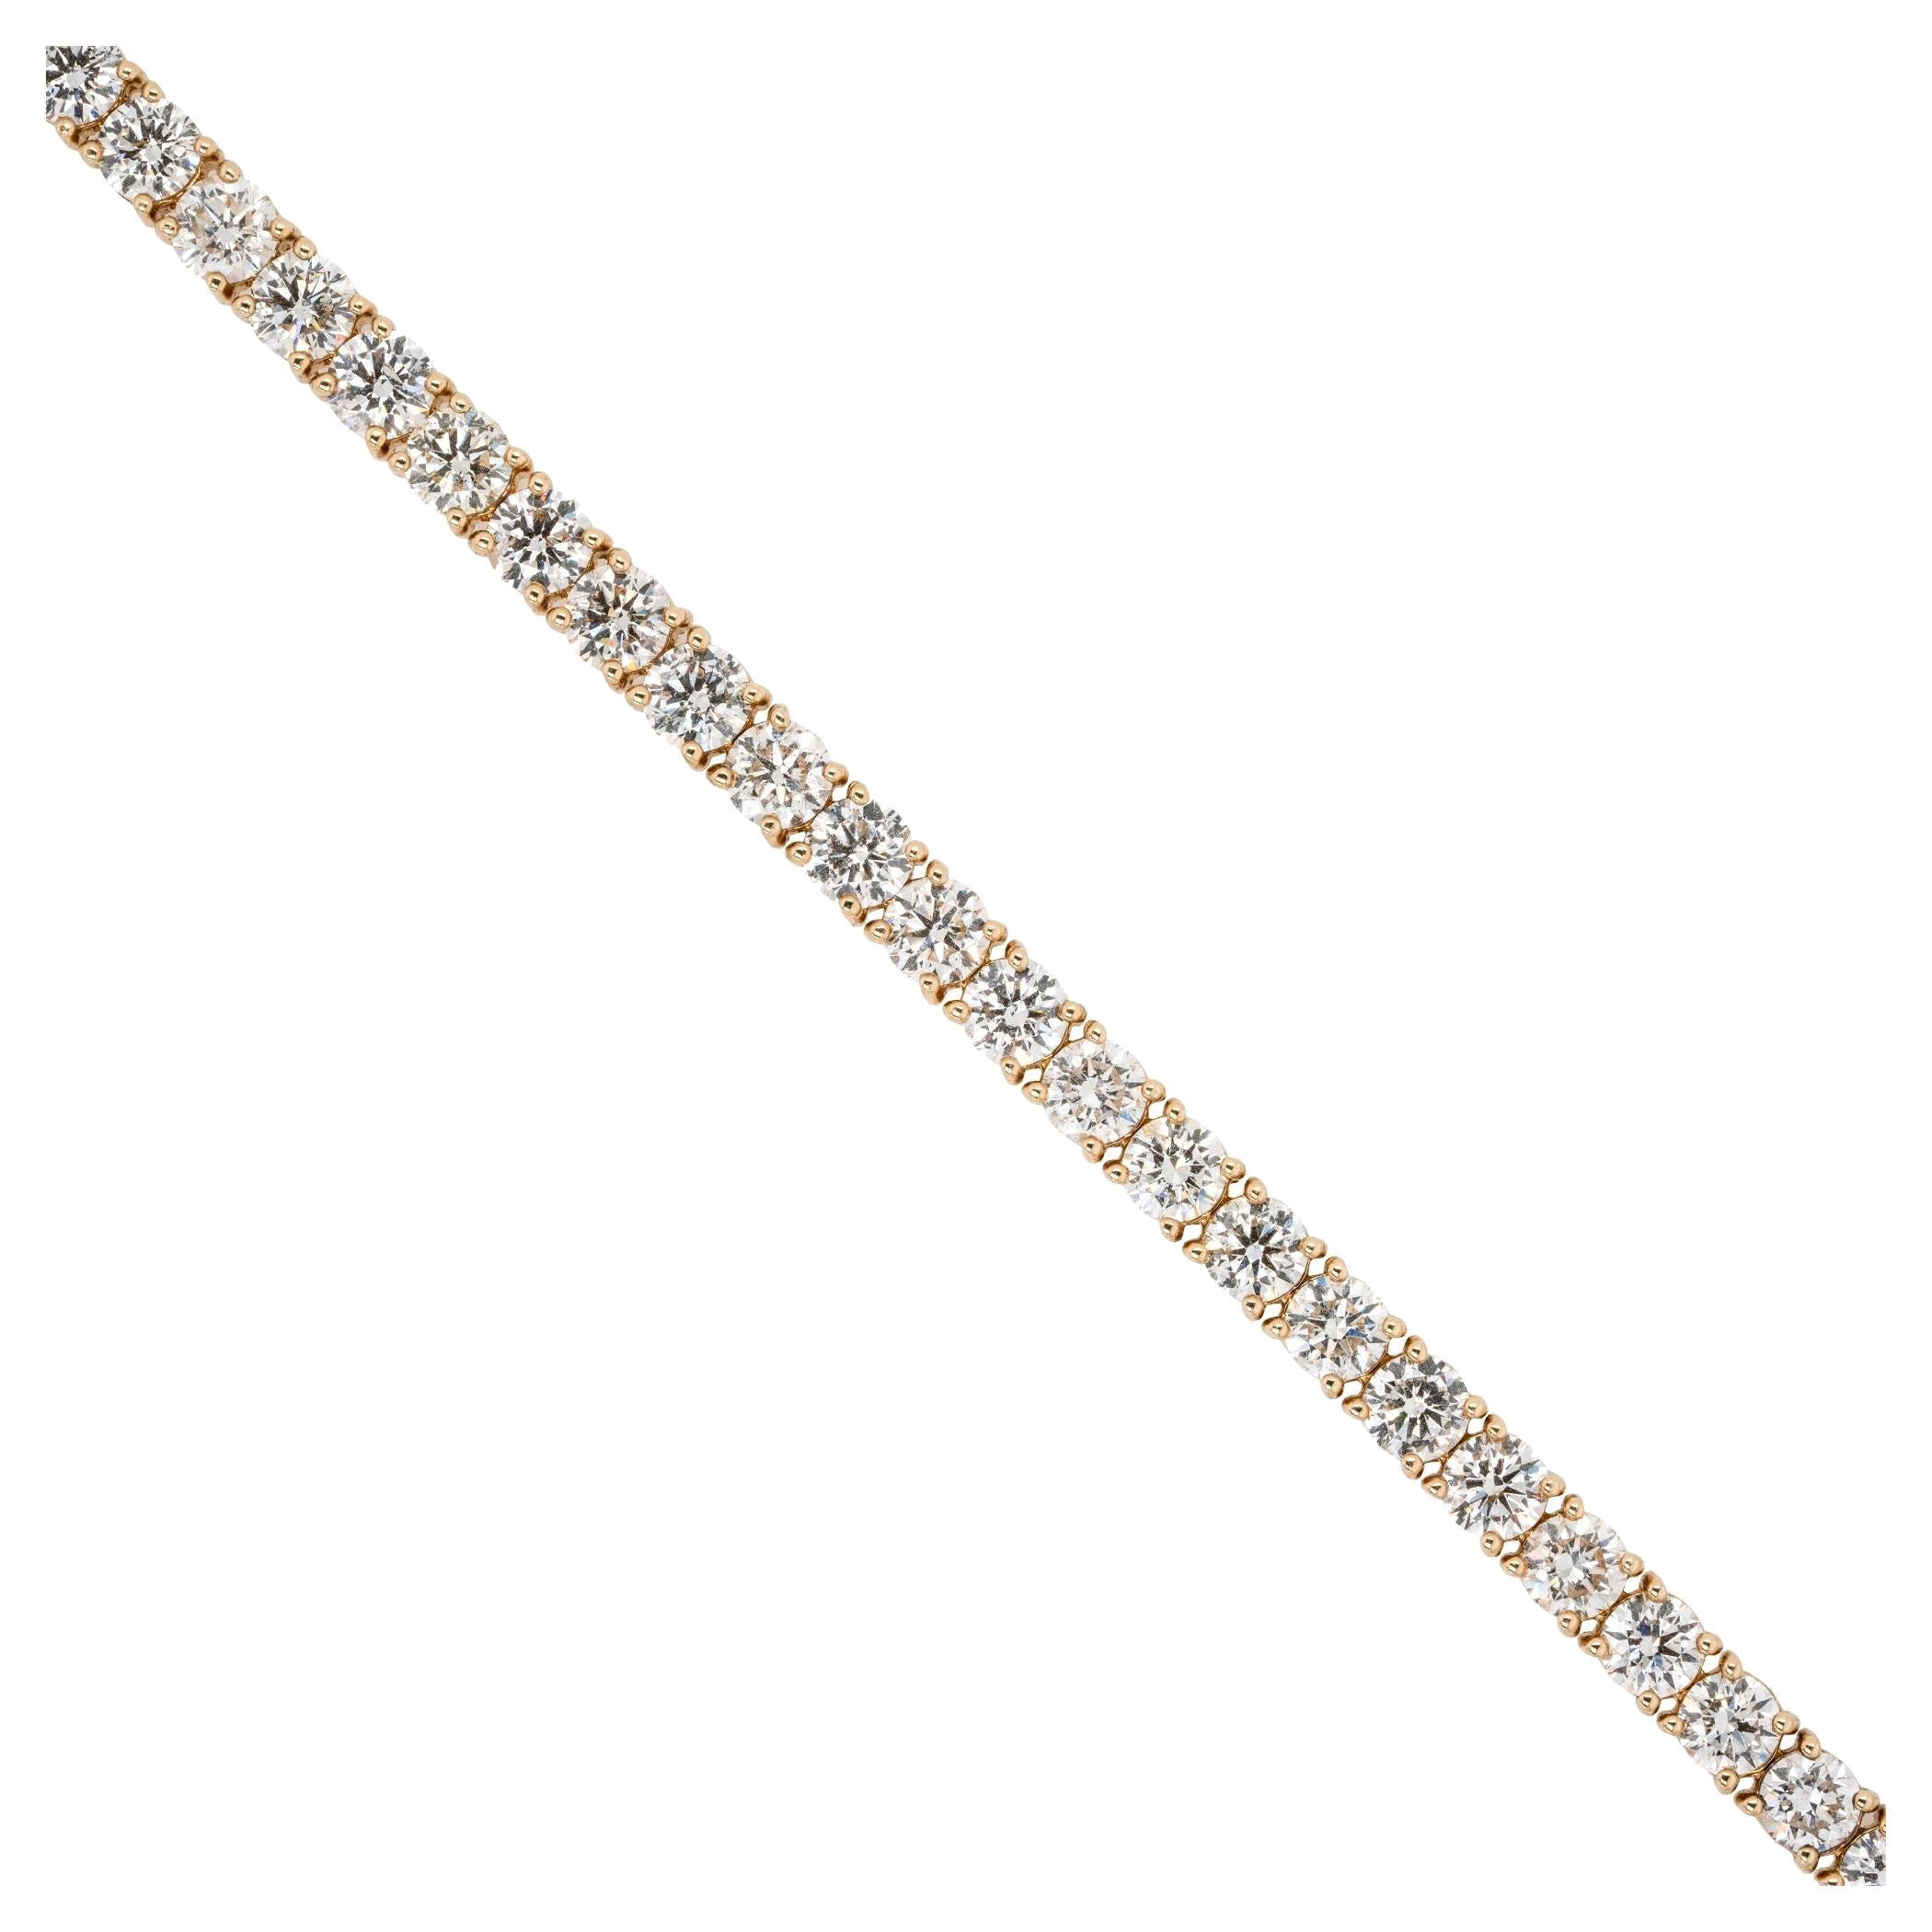 13.03 Carat Round Cut Diamond Tennis Bracelet 14 Karat in Stock For Sale